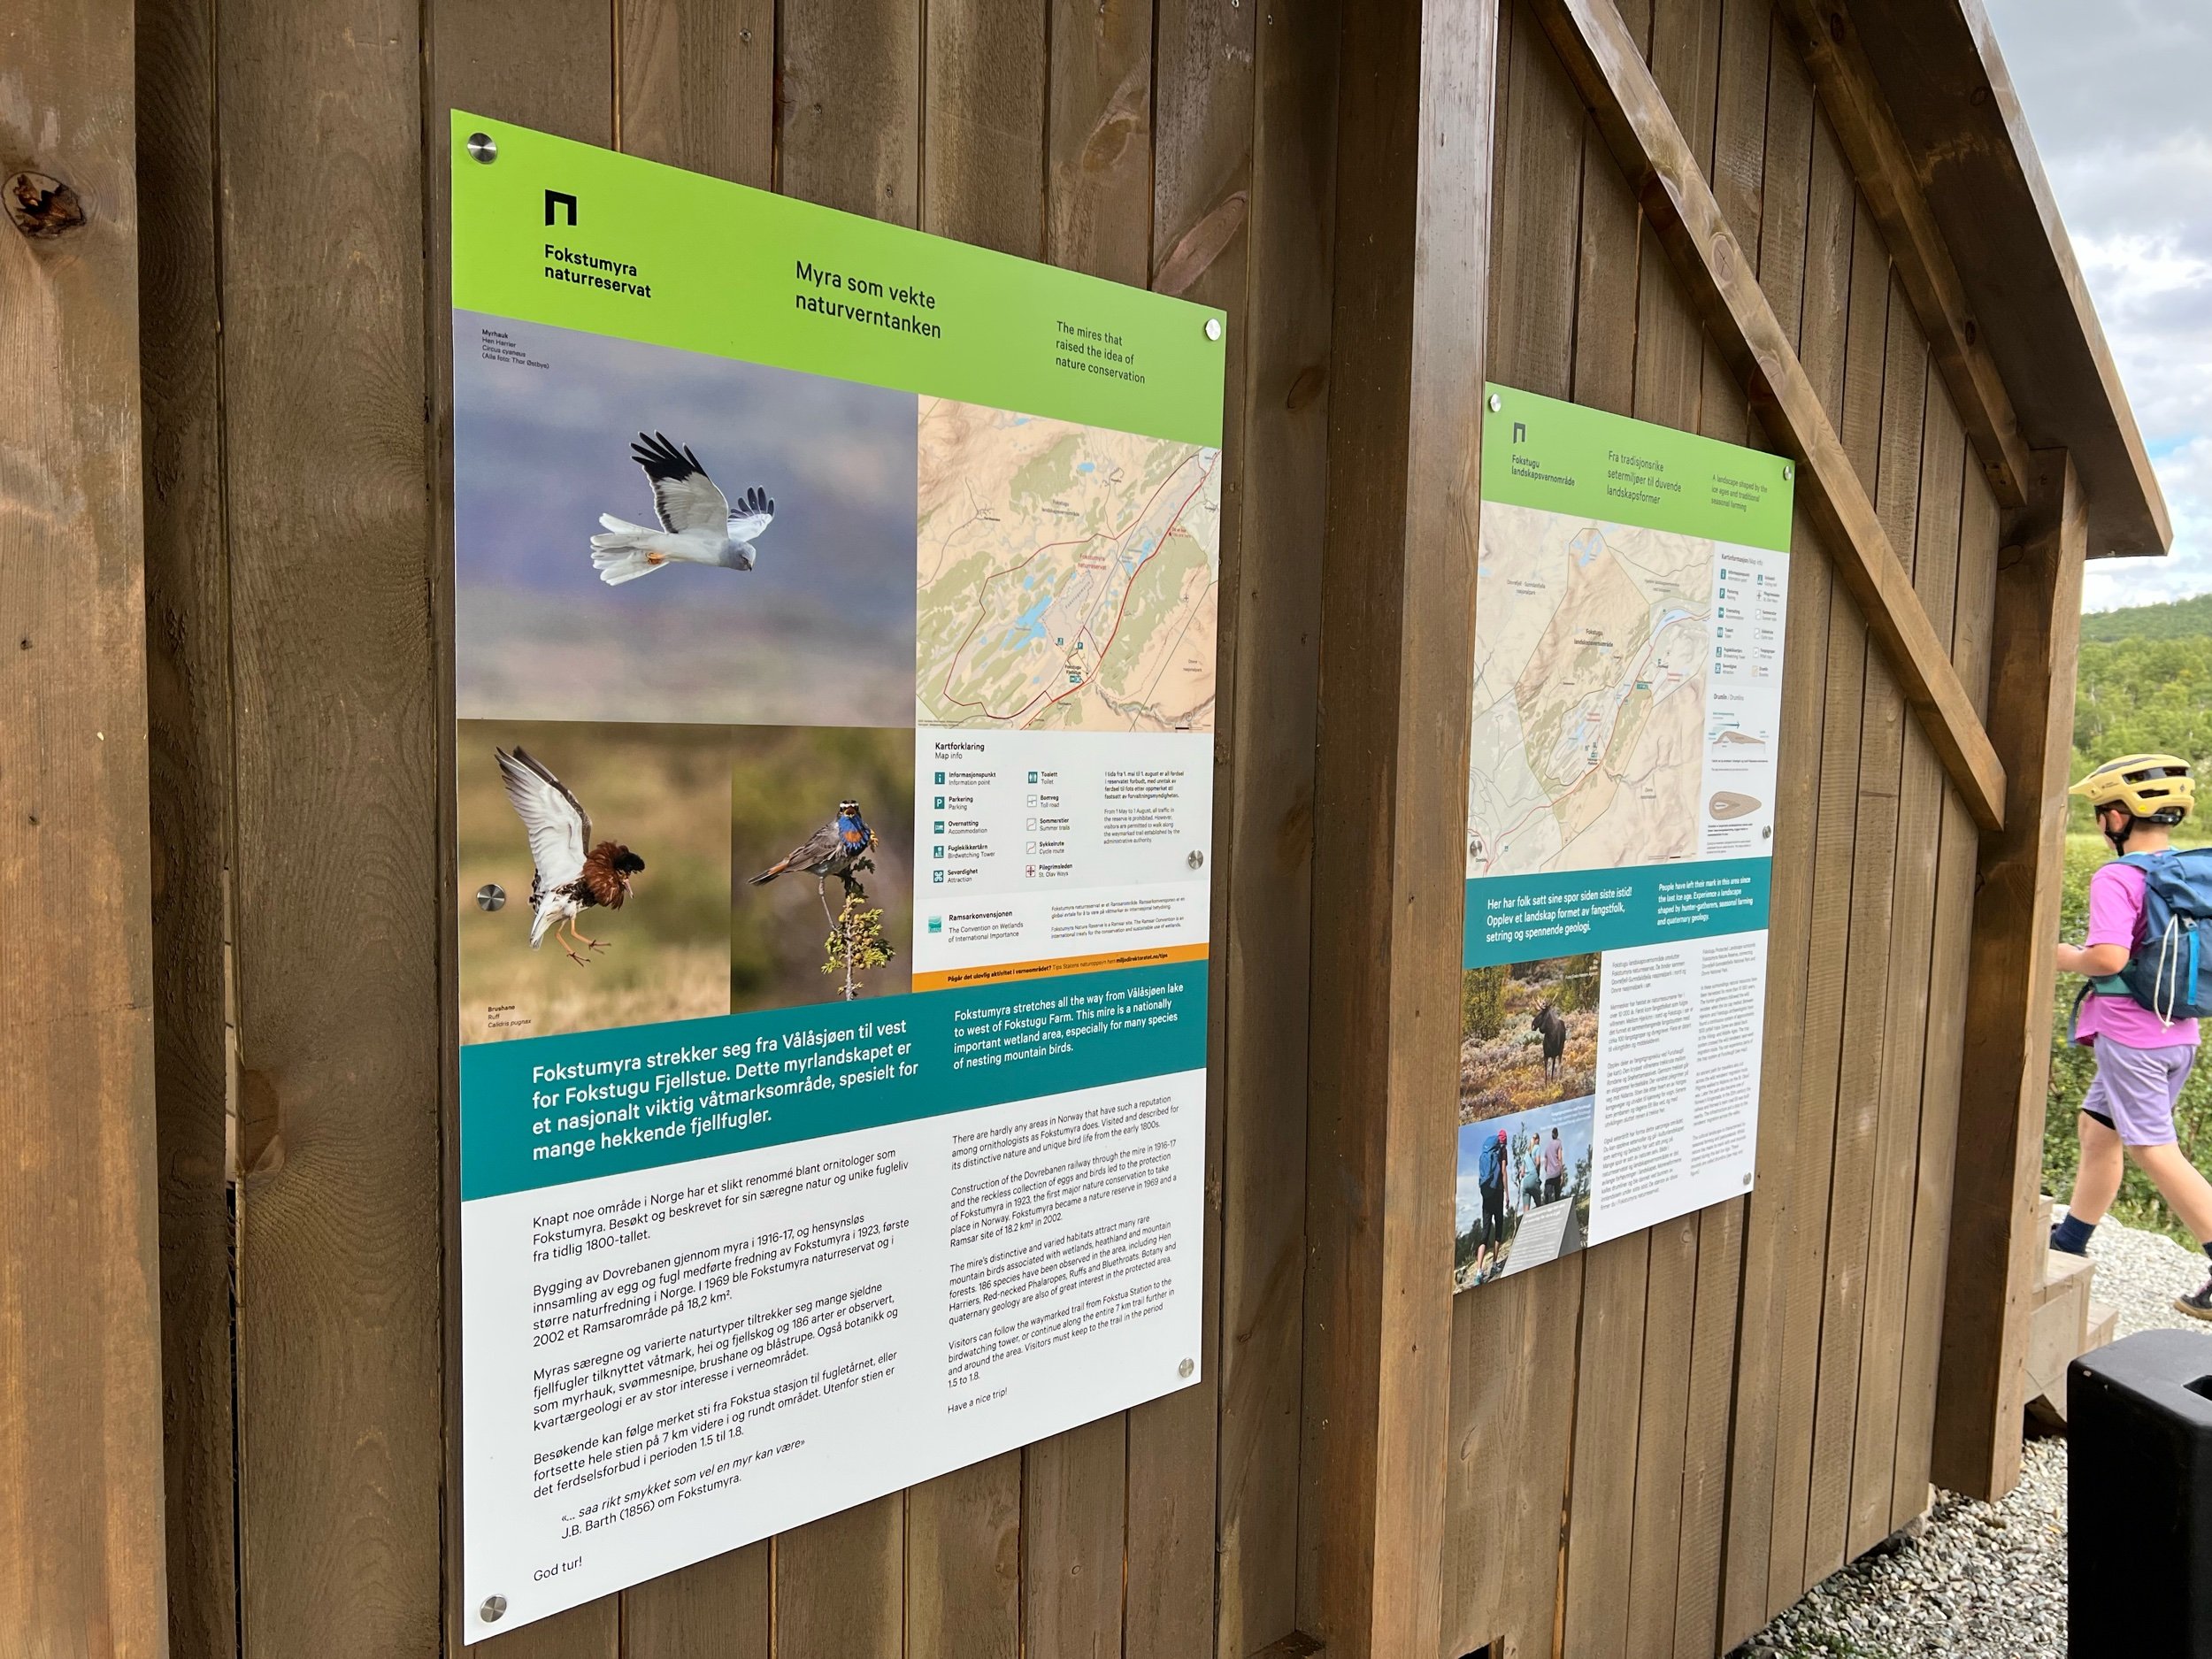  Plakat for Fokstumyra naturreservat og Fokstugu landskapsvernområde, på Rullestein 